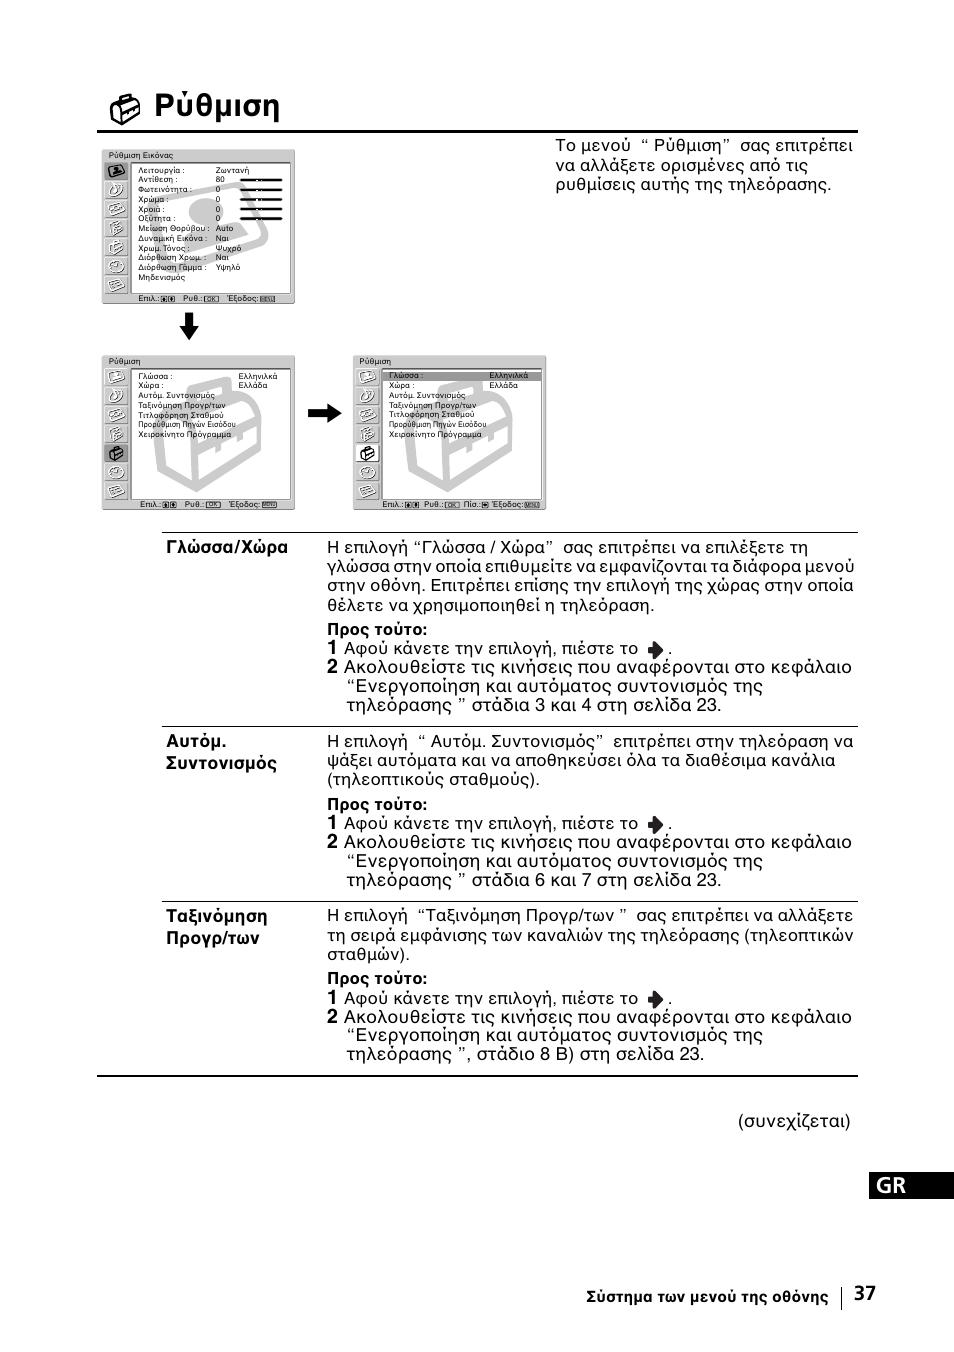 Pύθµιση, Γλώσσα / xώρα, Συνεχίζεται) | Sony KE-42MR1 Manuale d'uso | Pagina 263 / 302